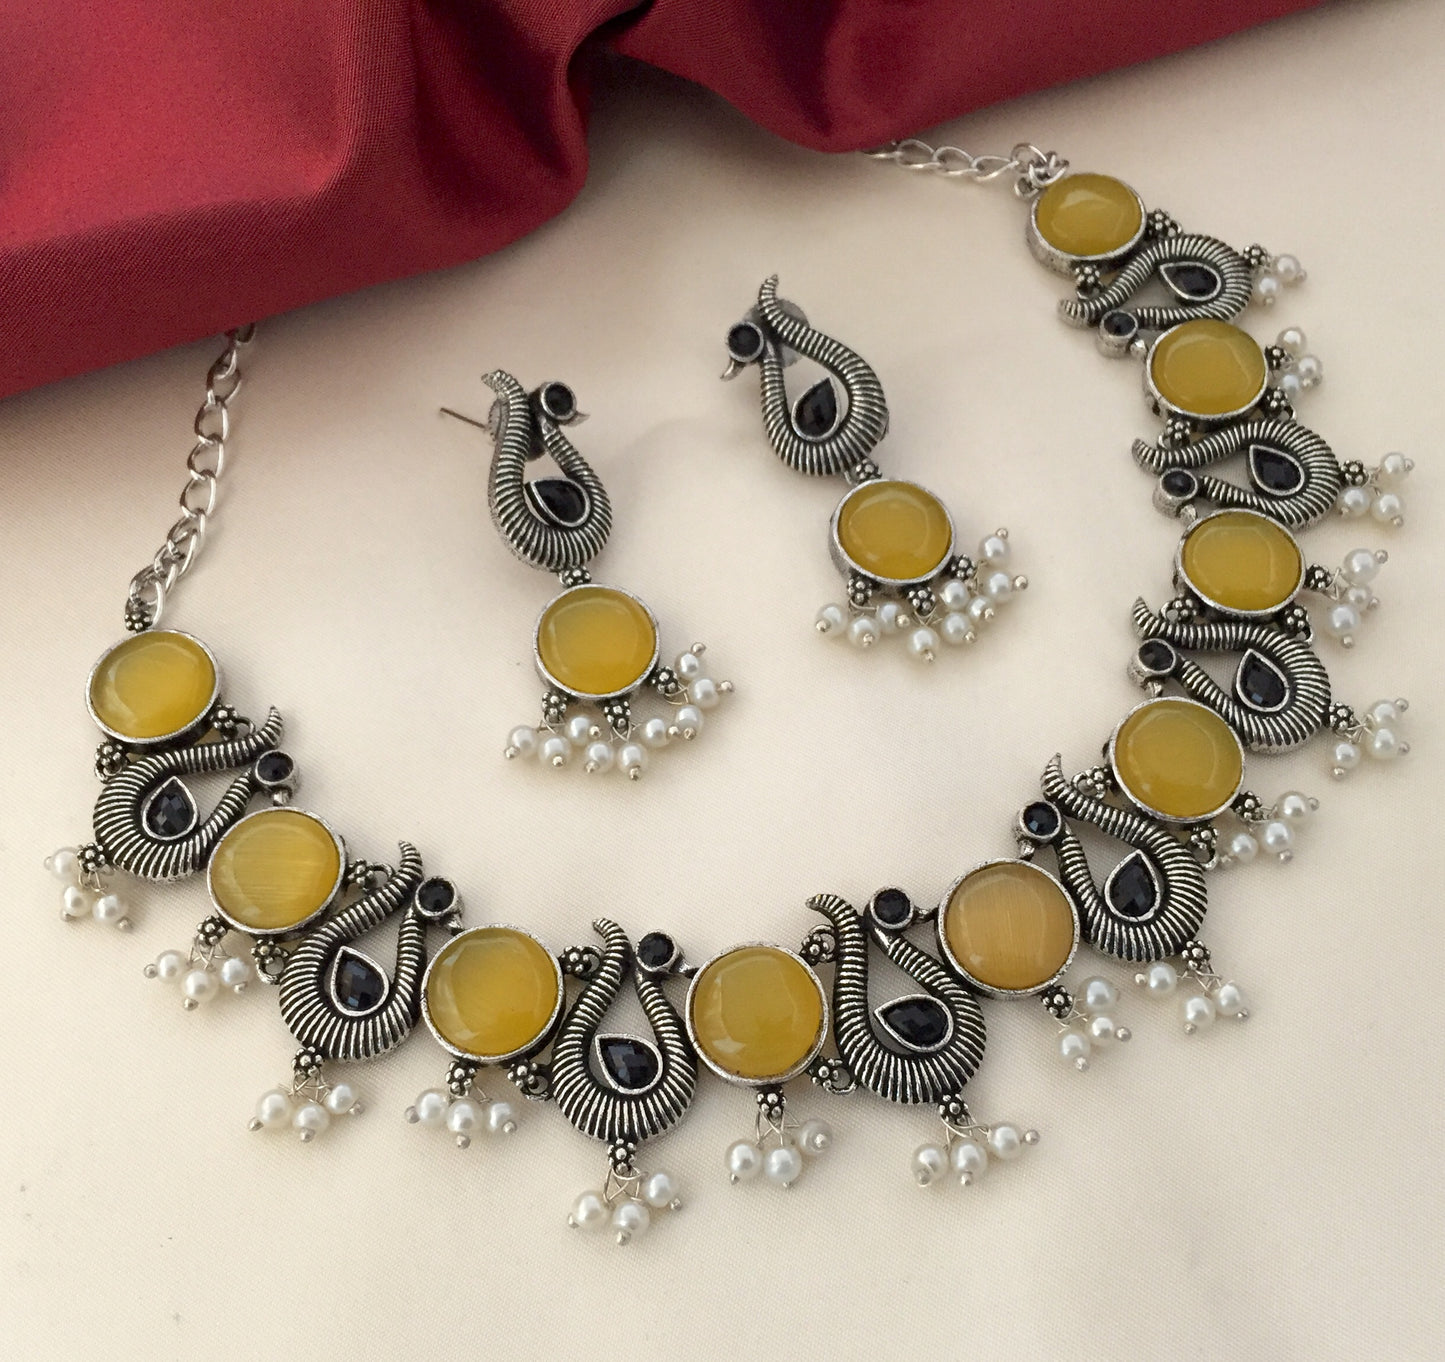 Oxidised yellow necklace with hanging earring monalisa stones